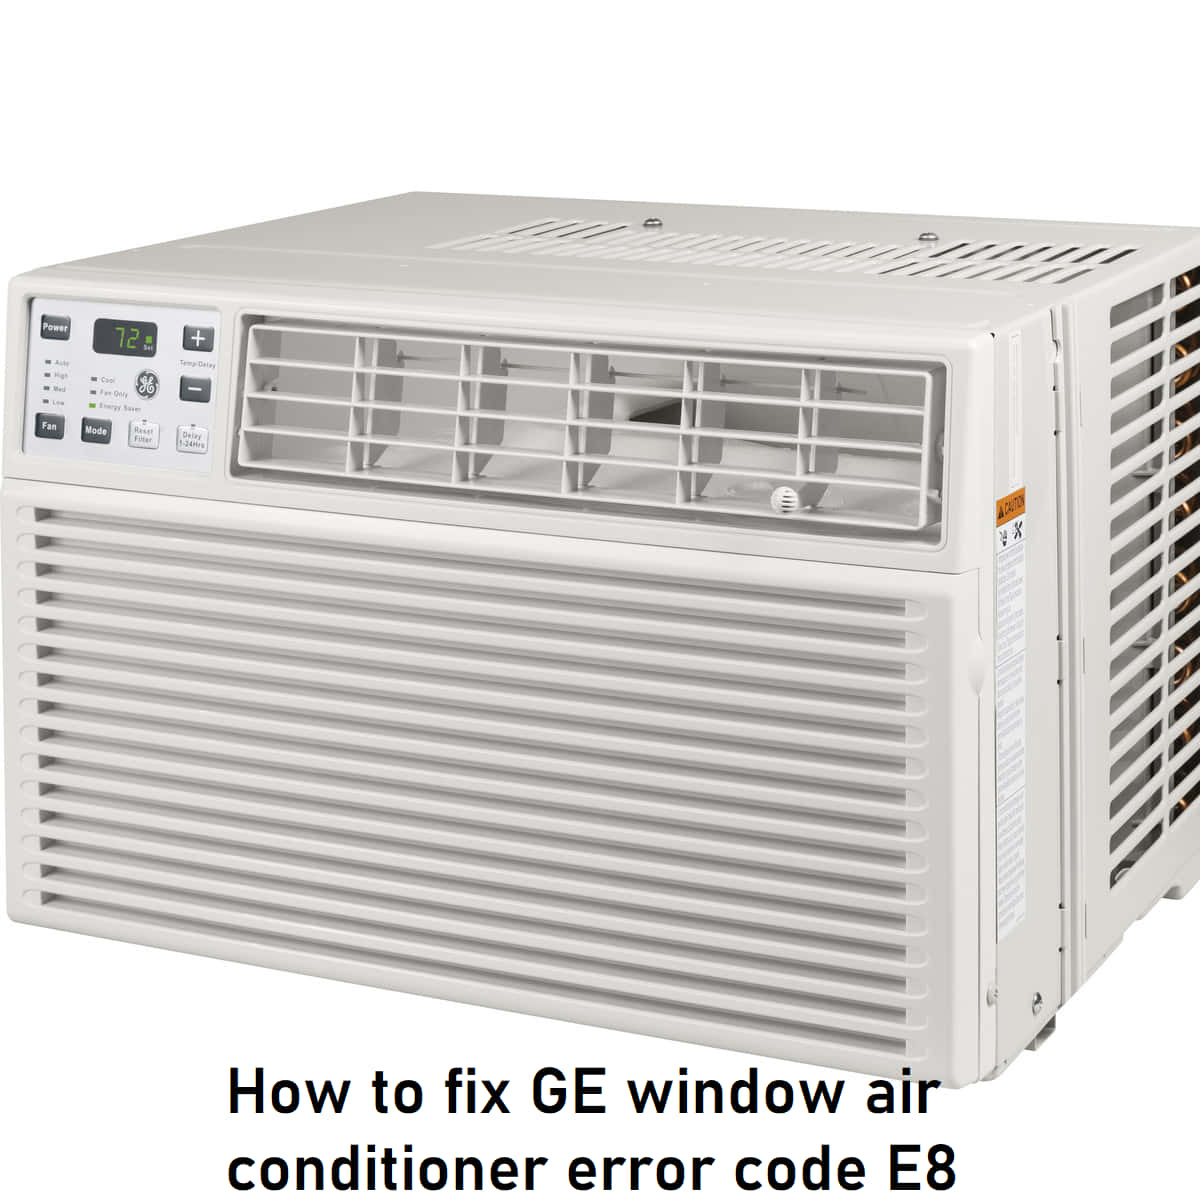 GE window air conditioner error code E8